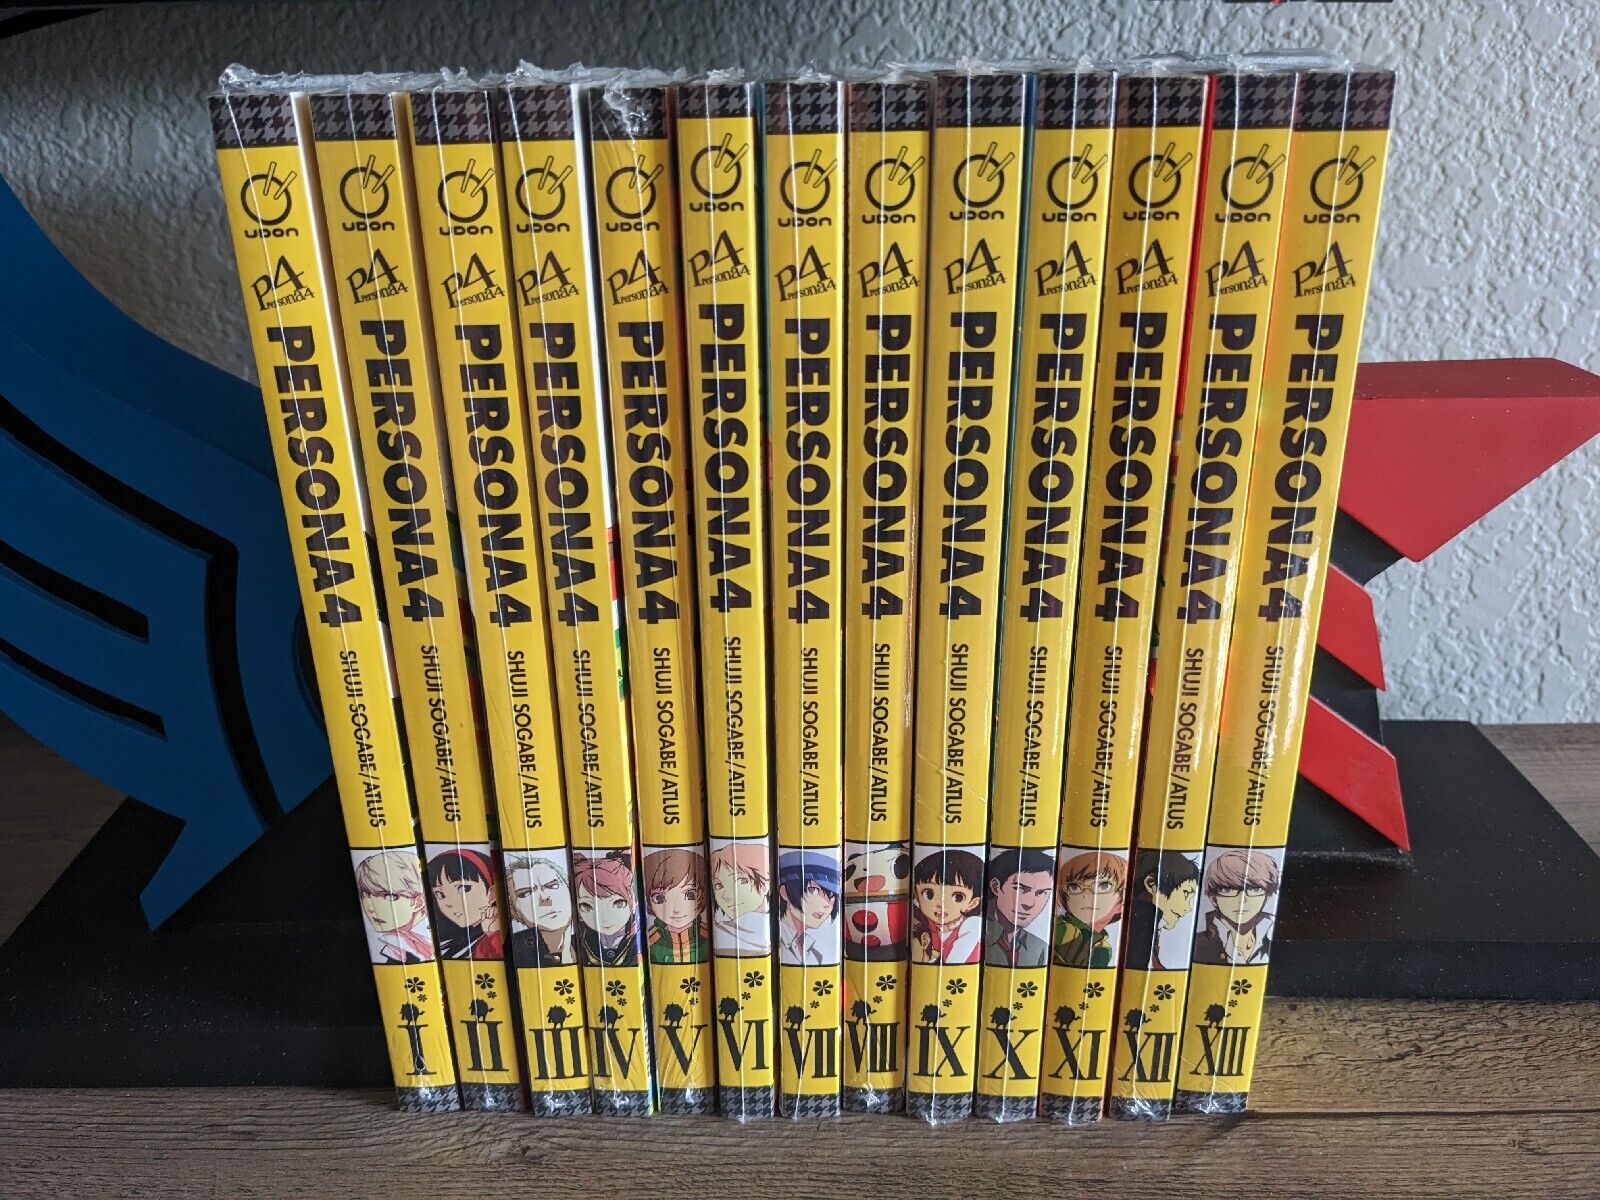 Persona 4 Vol 1-13 Complete English Manga Set - Brand New Shujii Sogabe Atlus